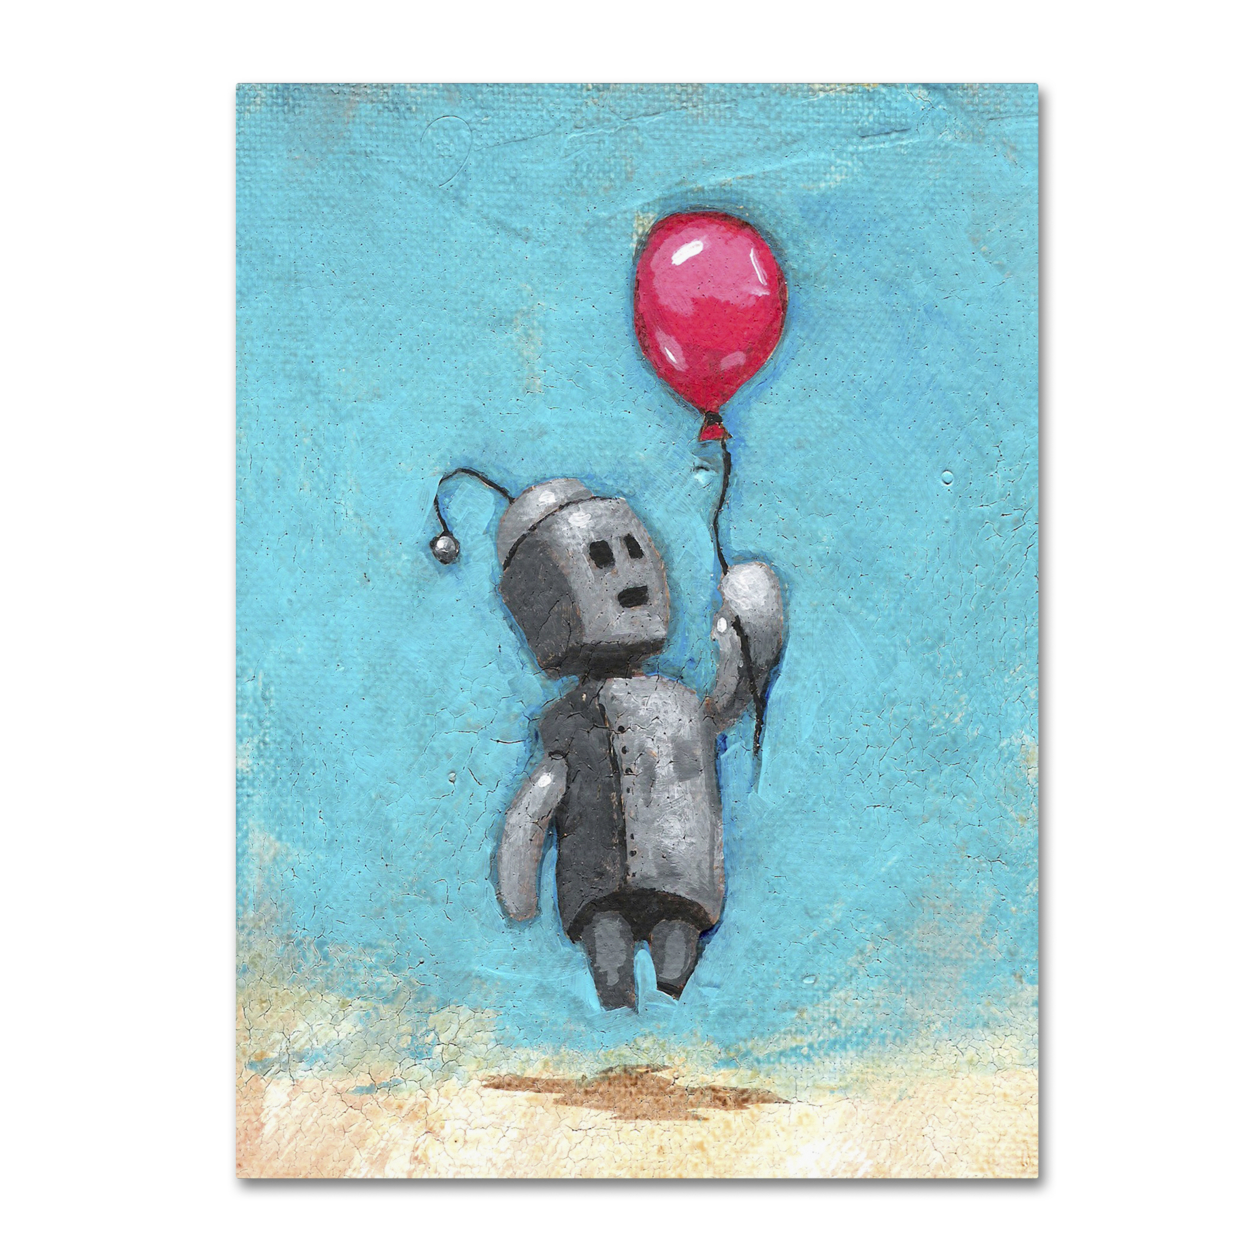 Craig Snodgrass 'Robot With Red Balloon' Canvas Art 18 X 24